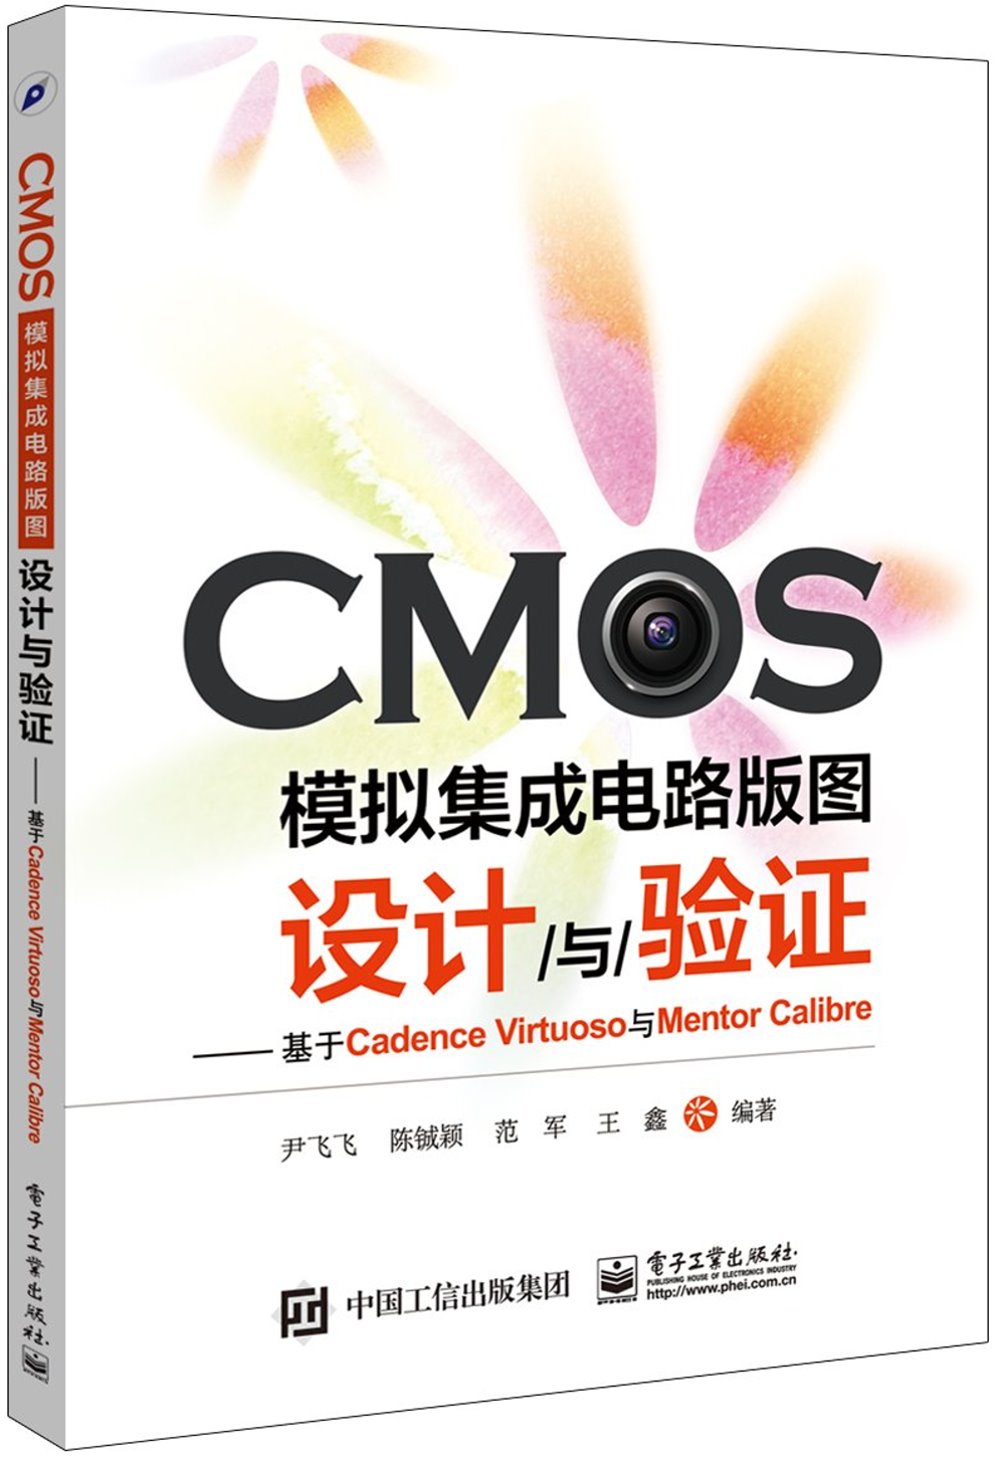 CMOS仿真集成電路版圖設計與驗證--基於Cadence Virtuoso與Mentor Calibre